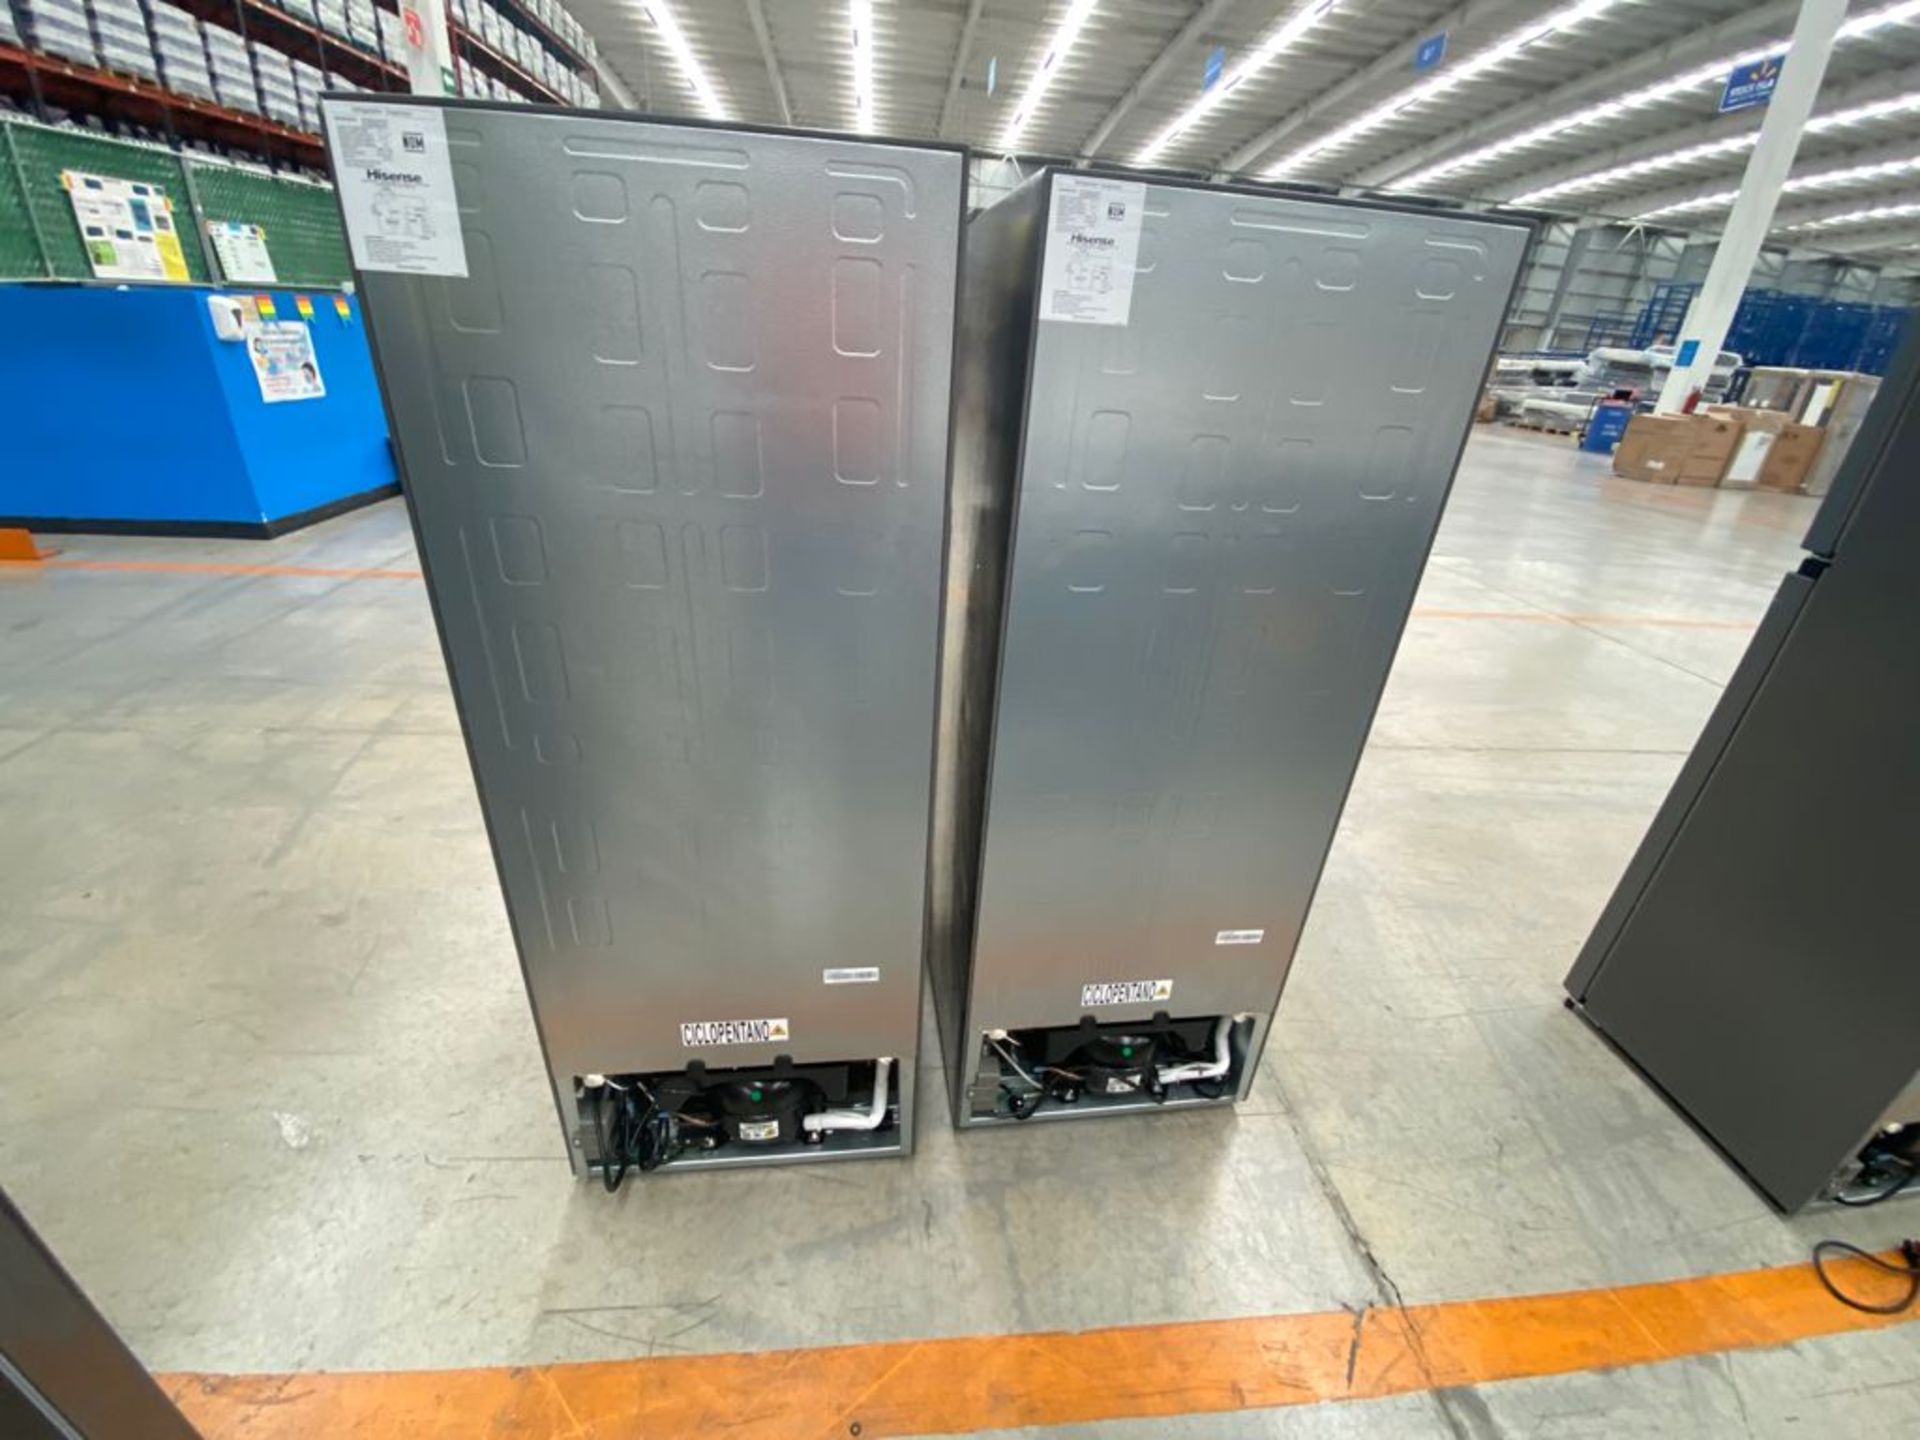 2 Refrigeradores marca Hisense color gris modelo RT80D6AWX - Image 9 of 28